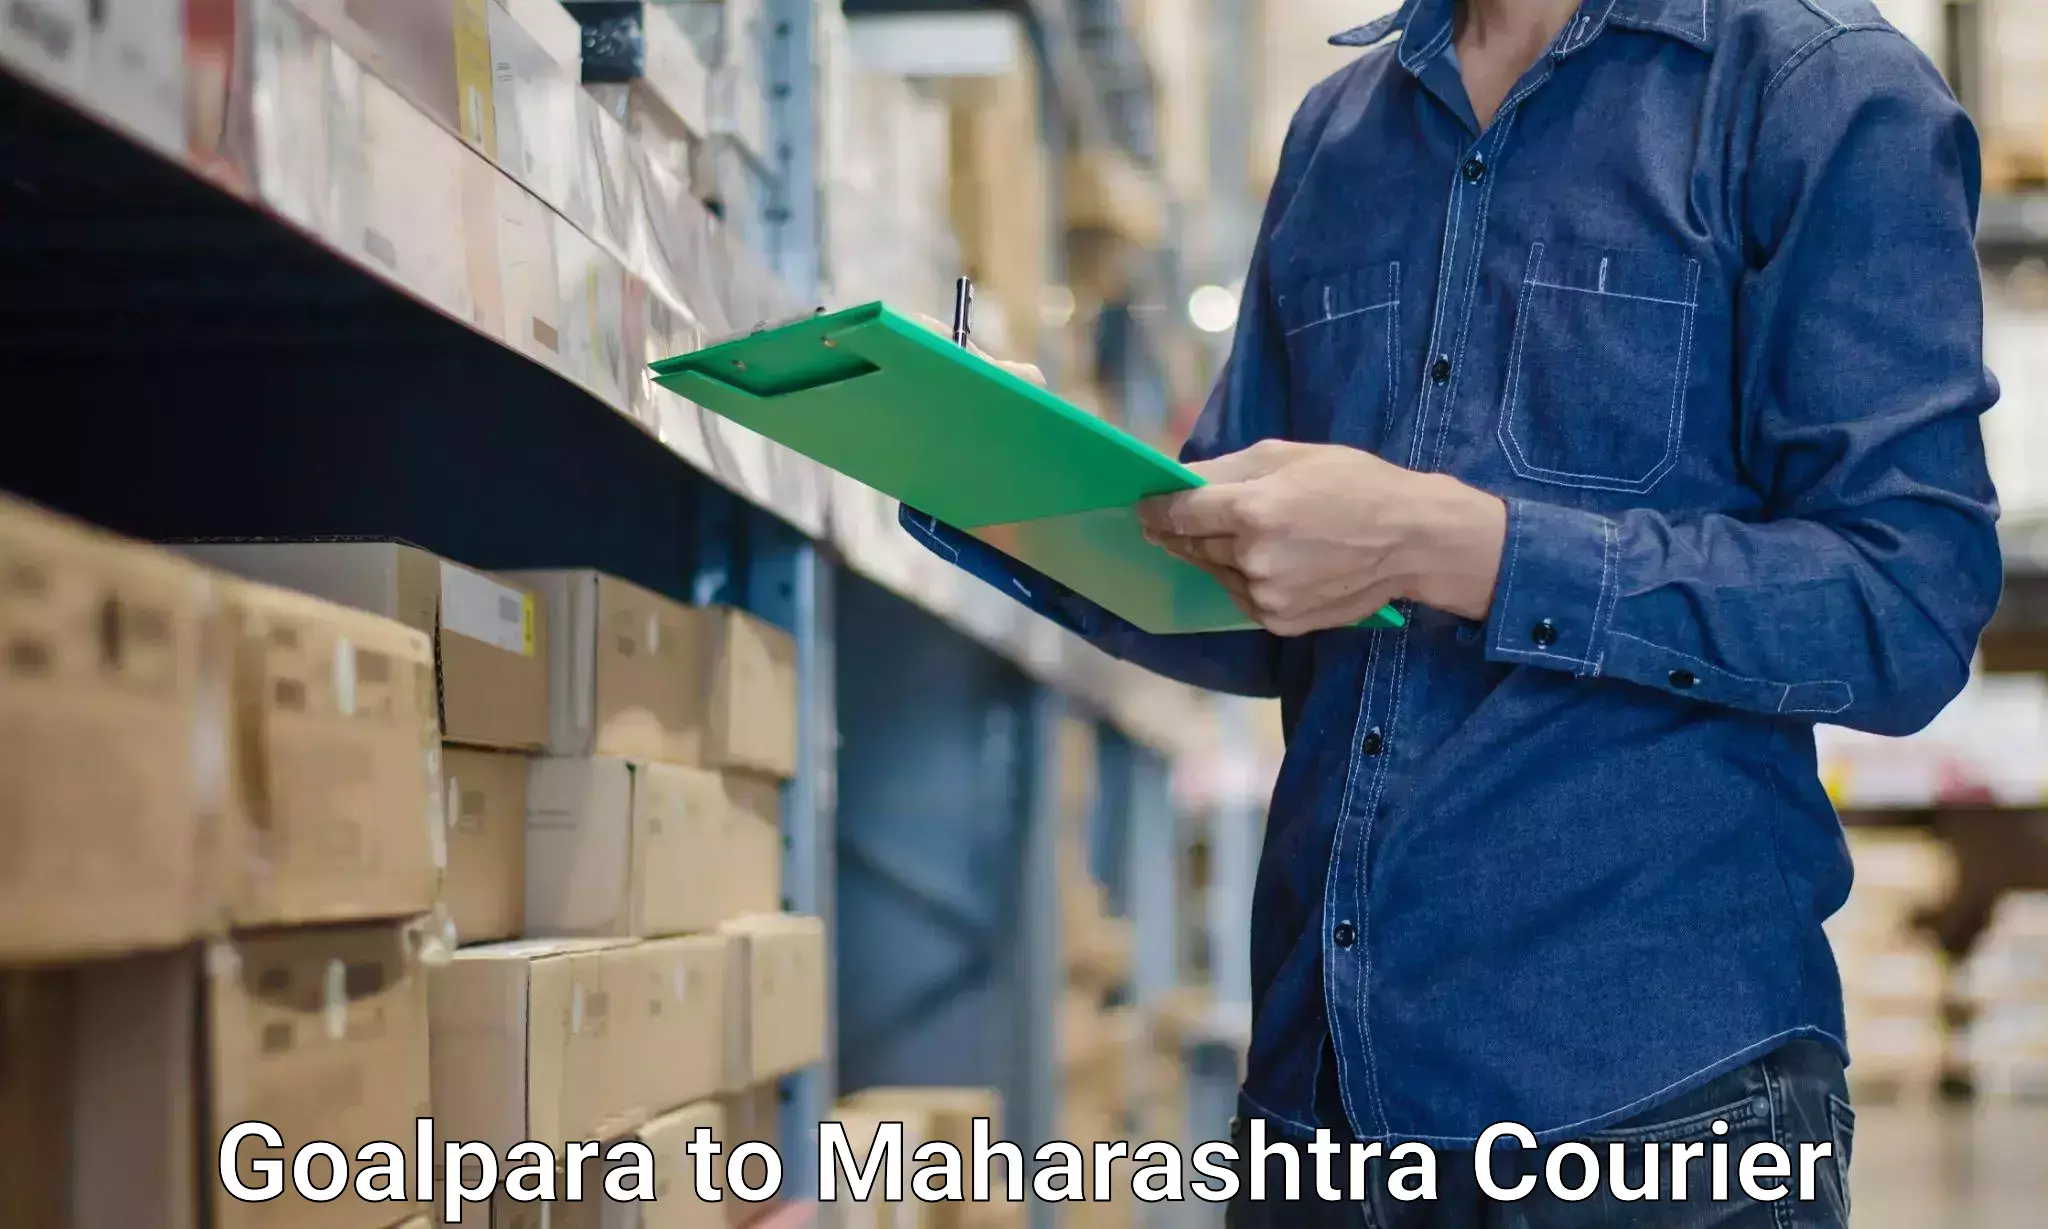 Efficient moving company Goalpara to Pune